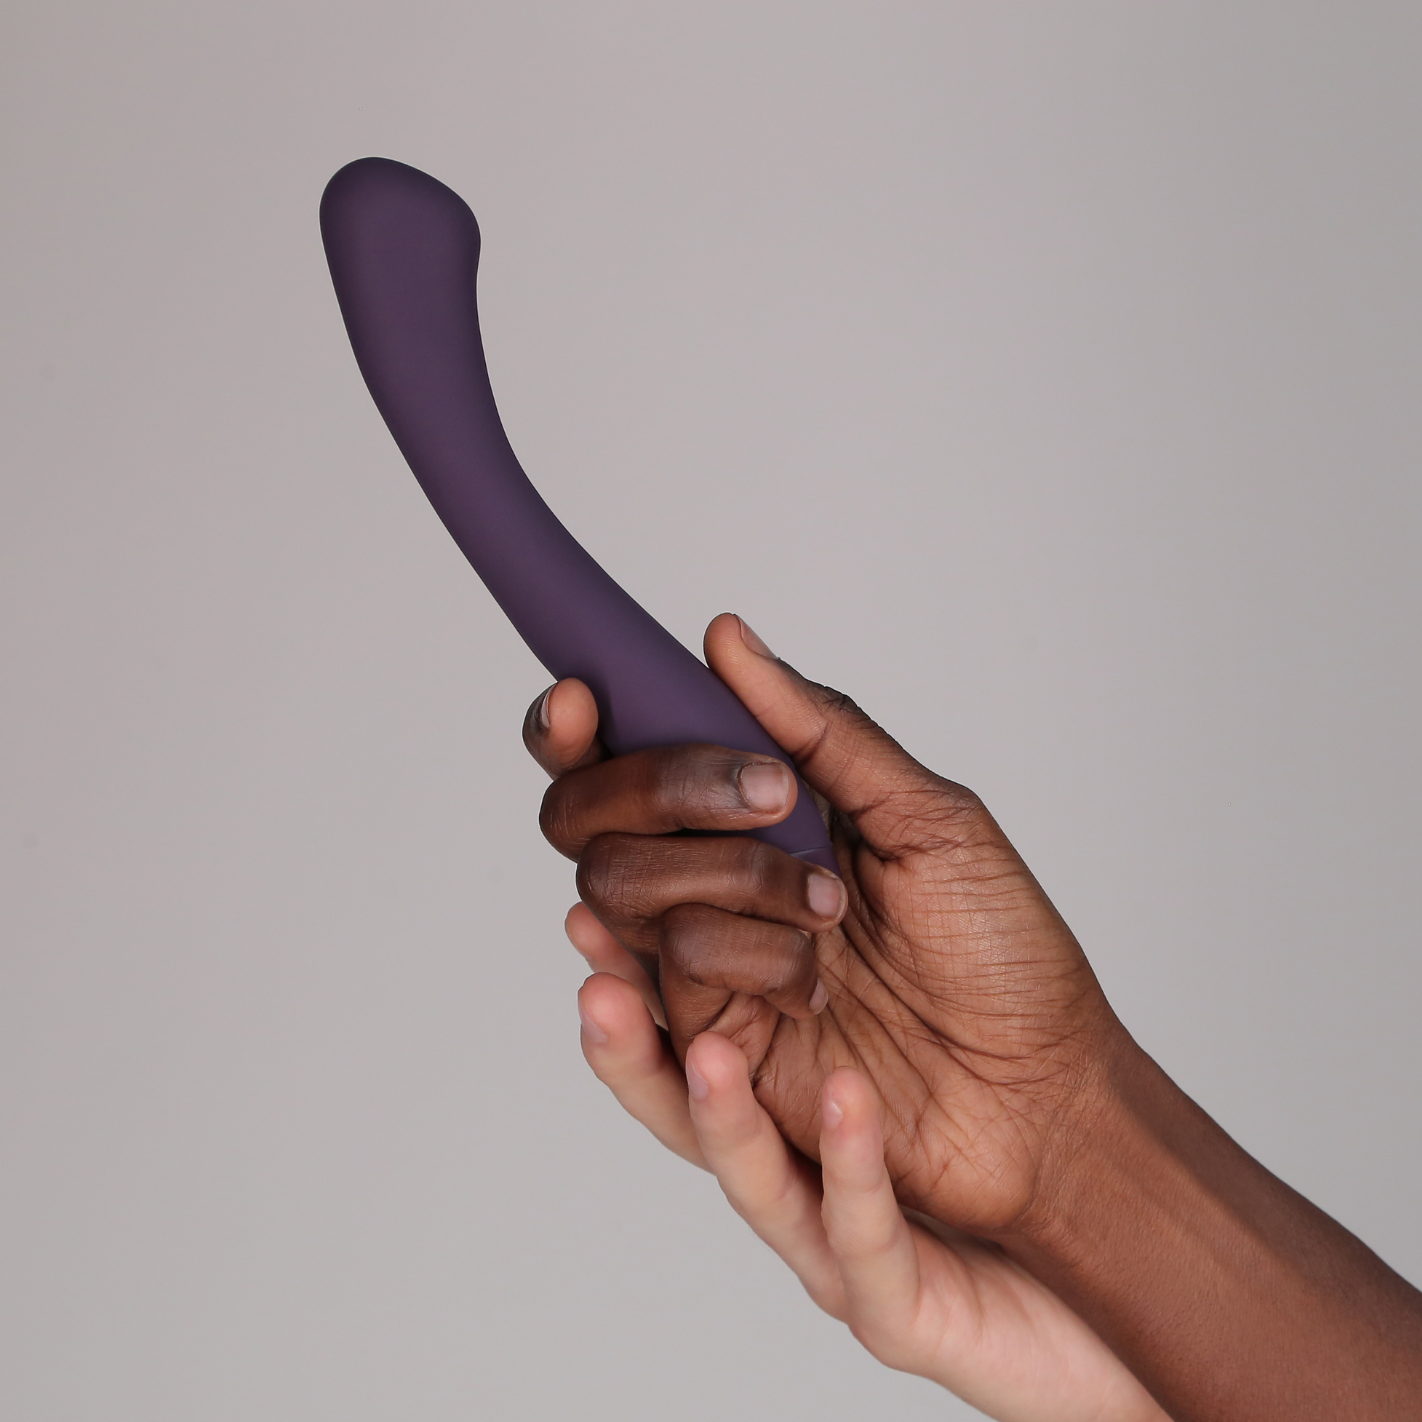 Hands holding purple Juno vibrator